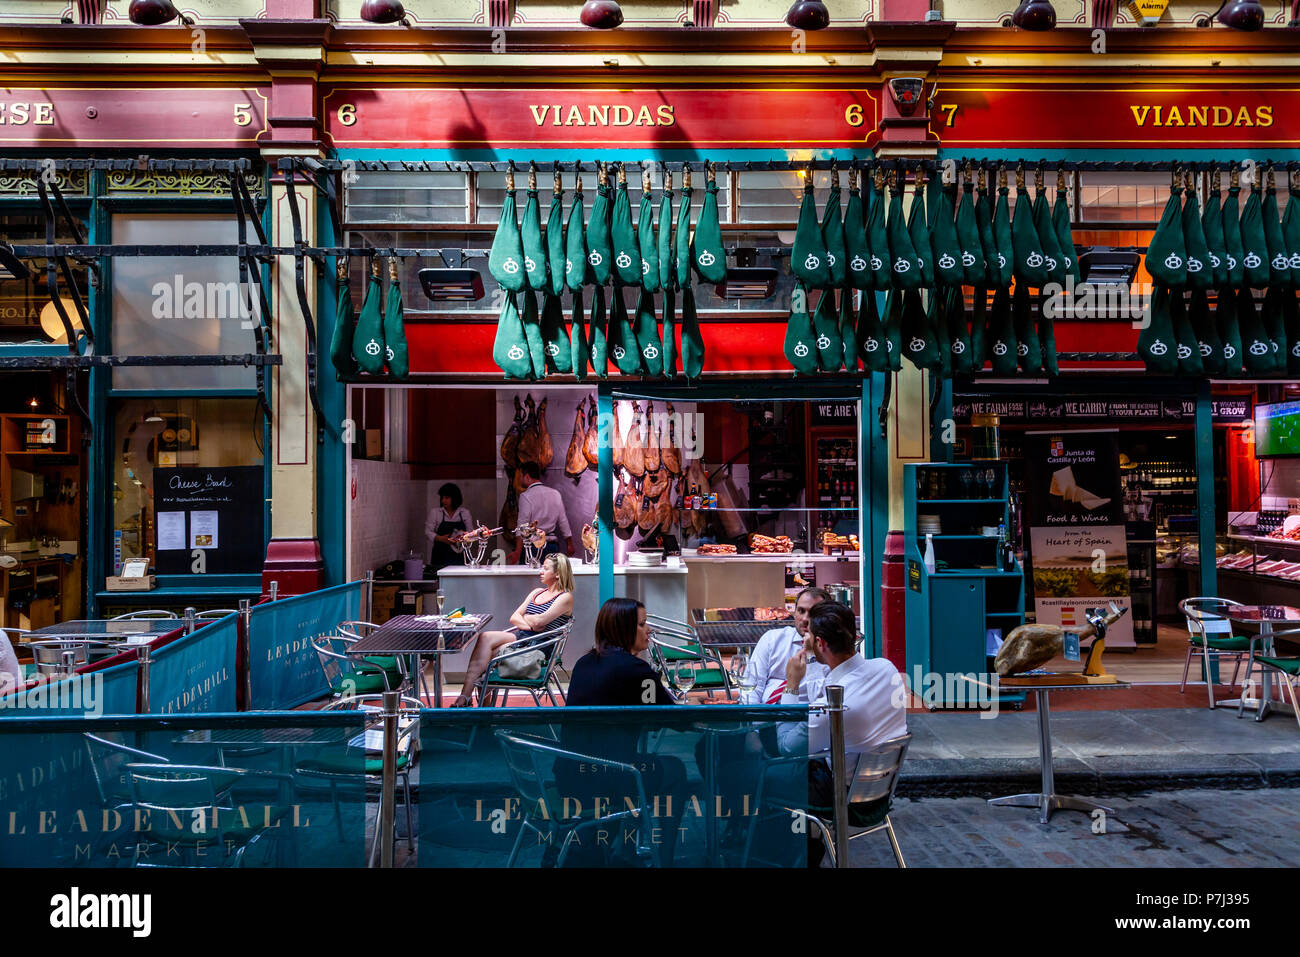 Viandas Restaurant At Leadenhall Market, London, United Kingdom Stock Photo